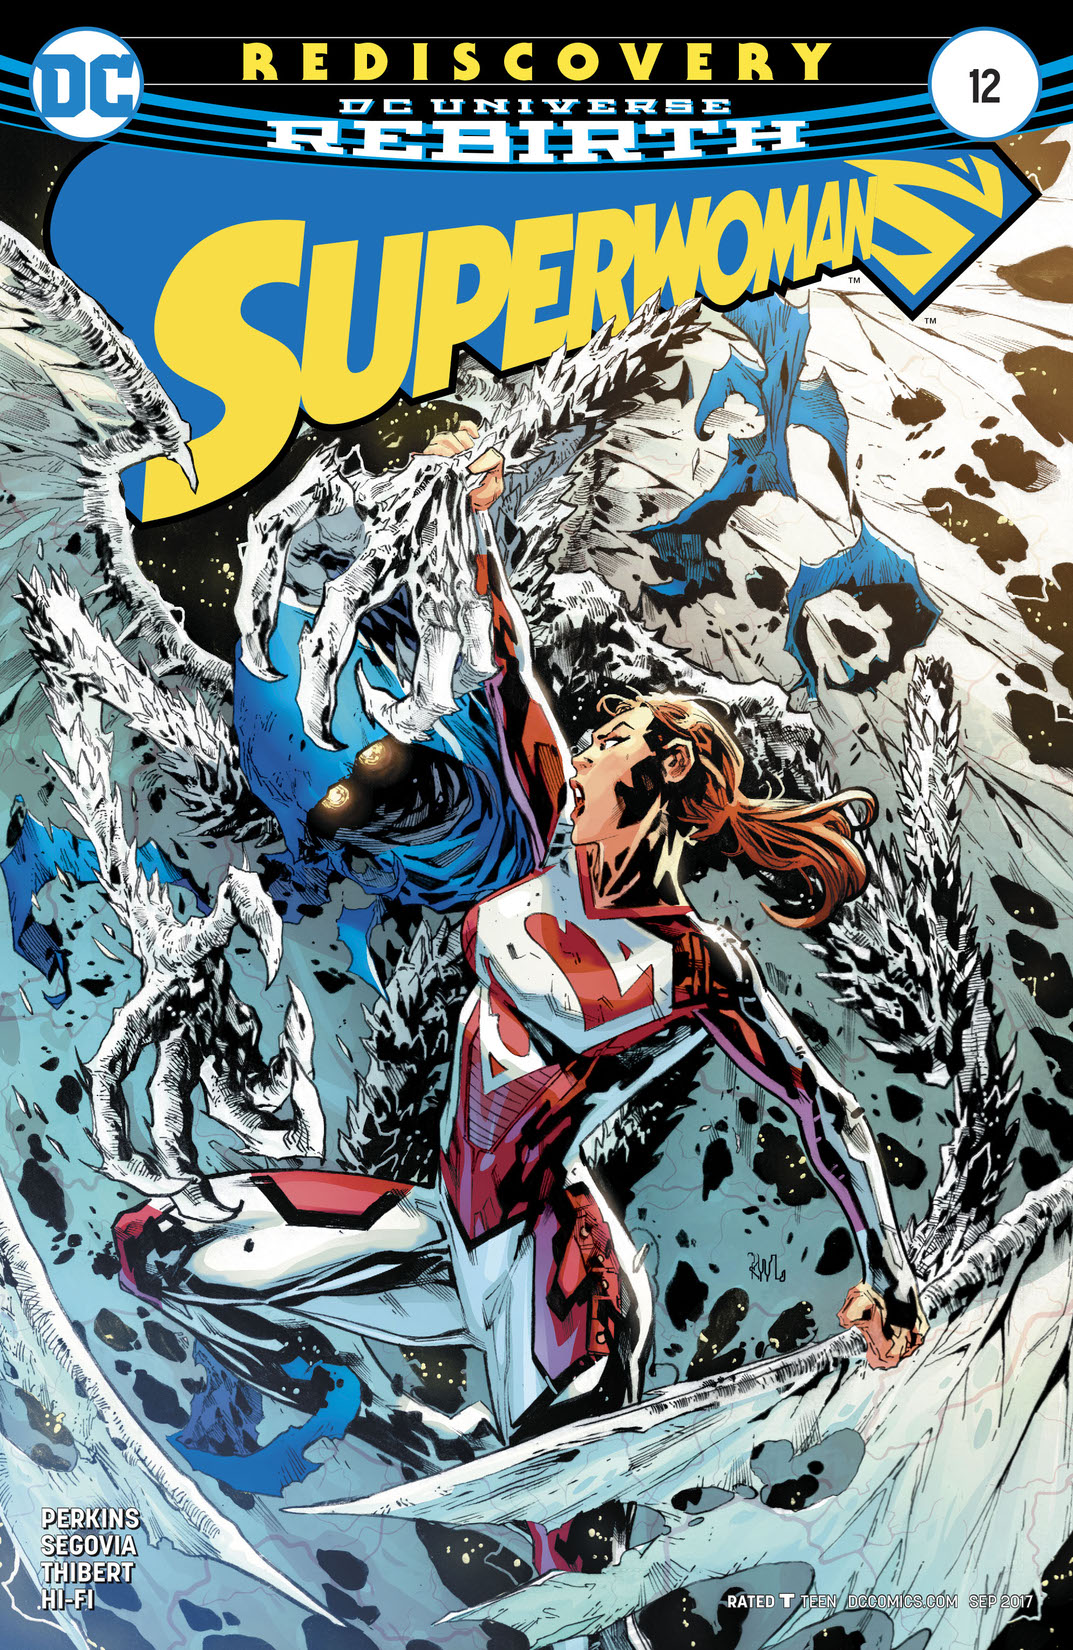 Superwoman #12 preview images